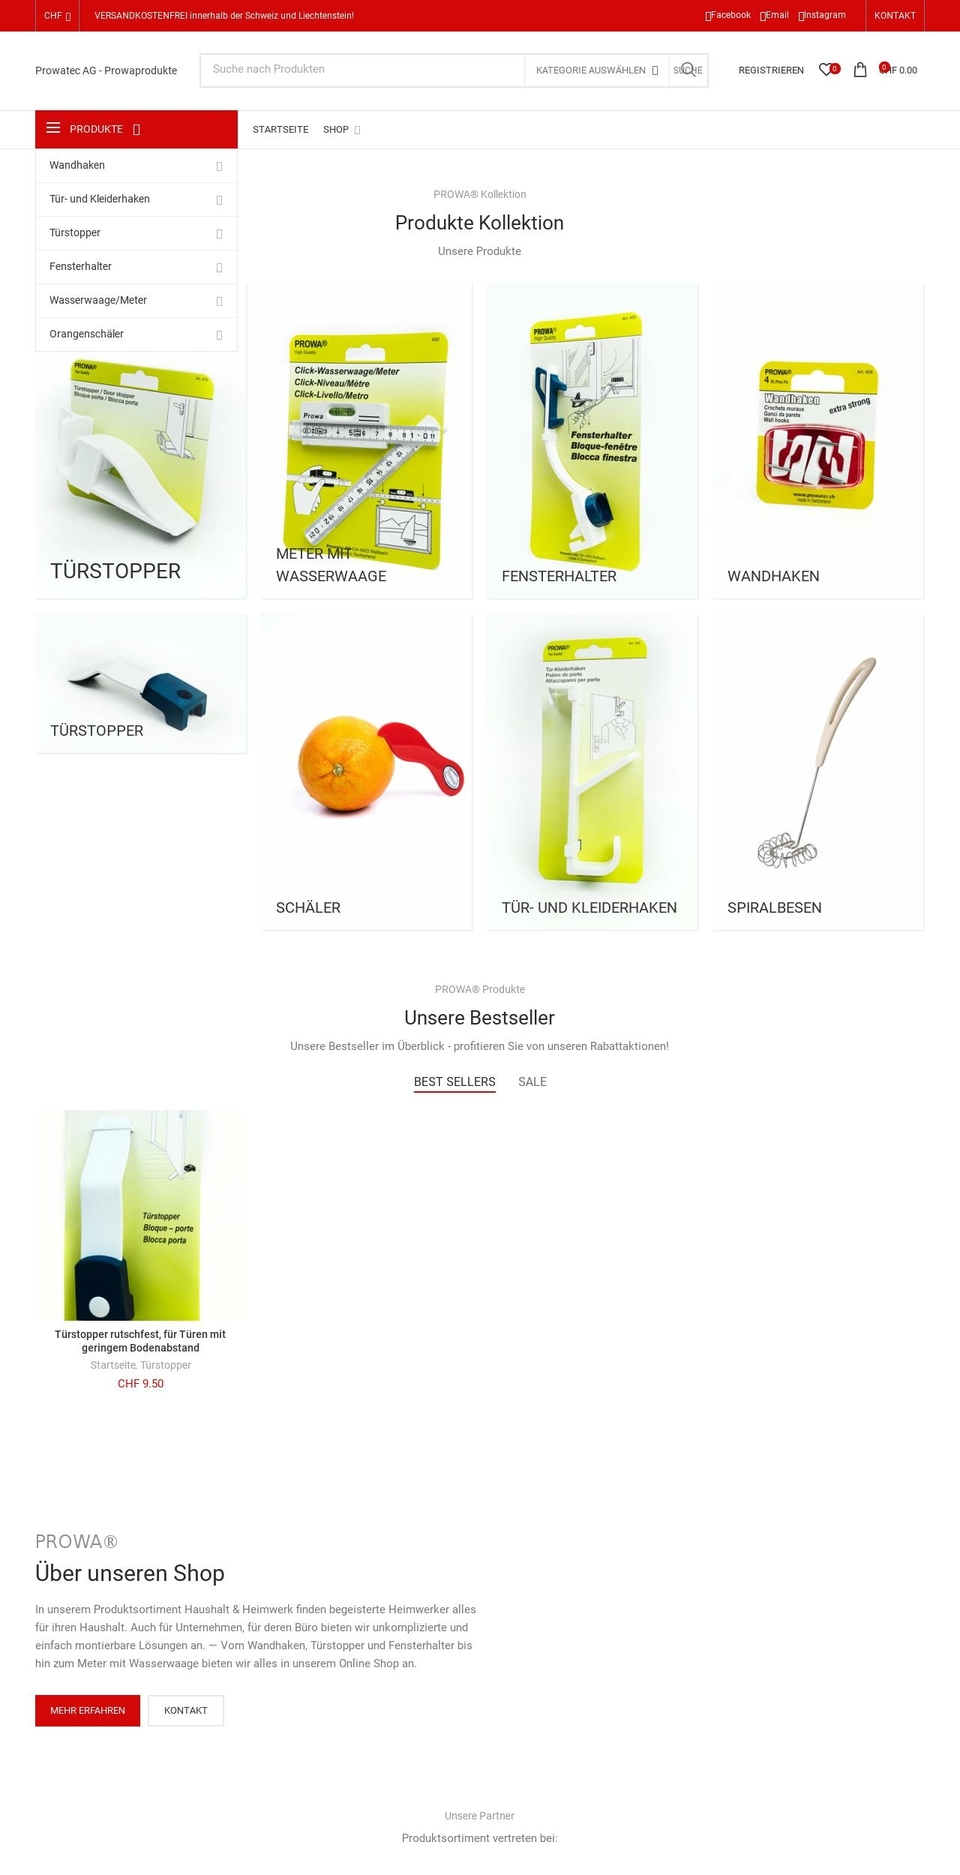 prowa-produkte.ch shopify website screenshot